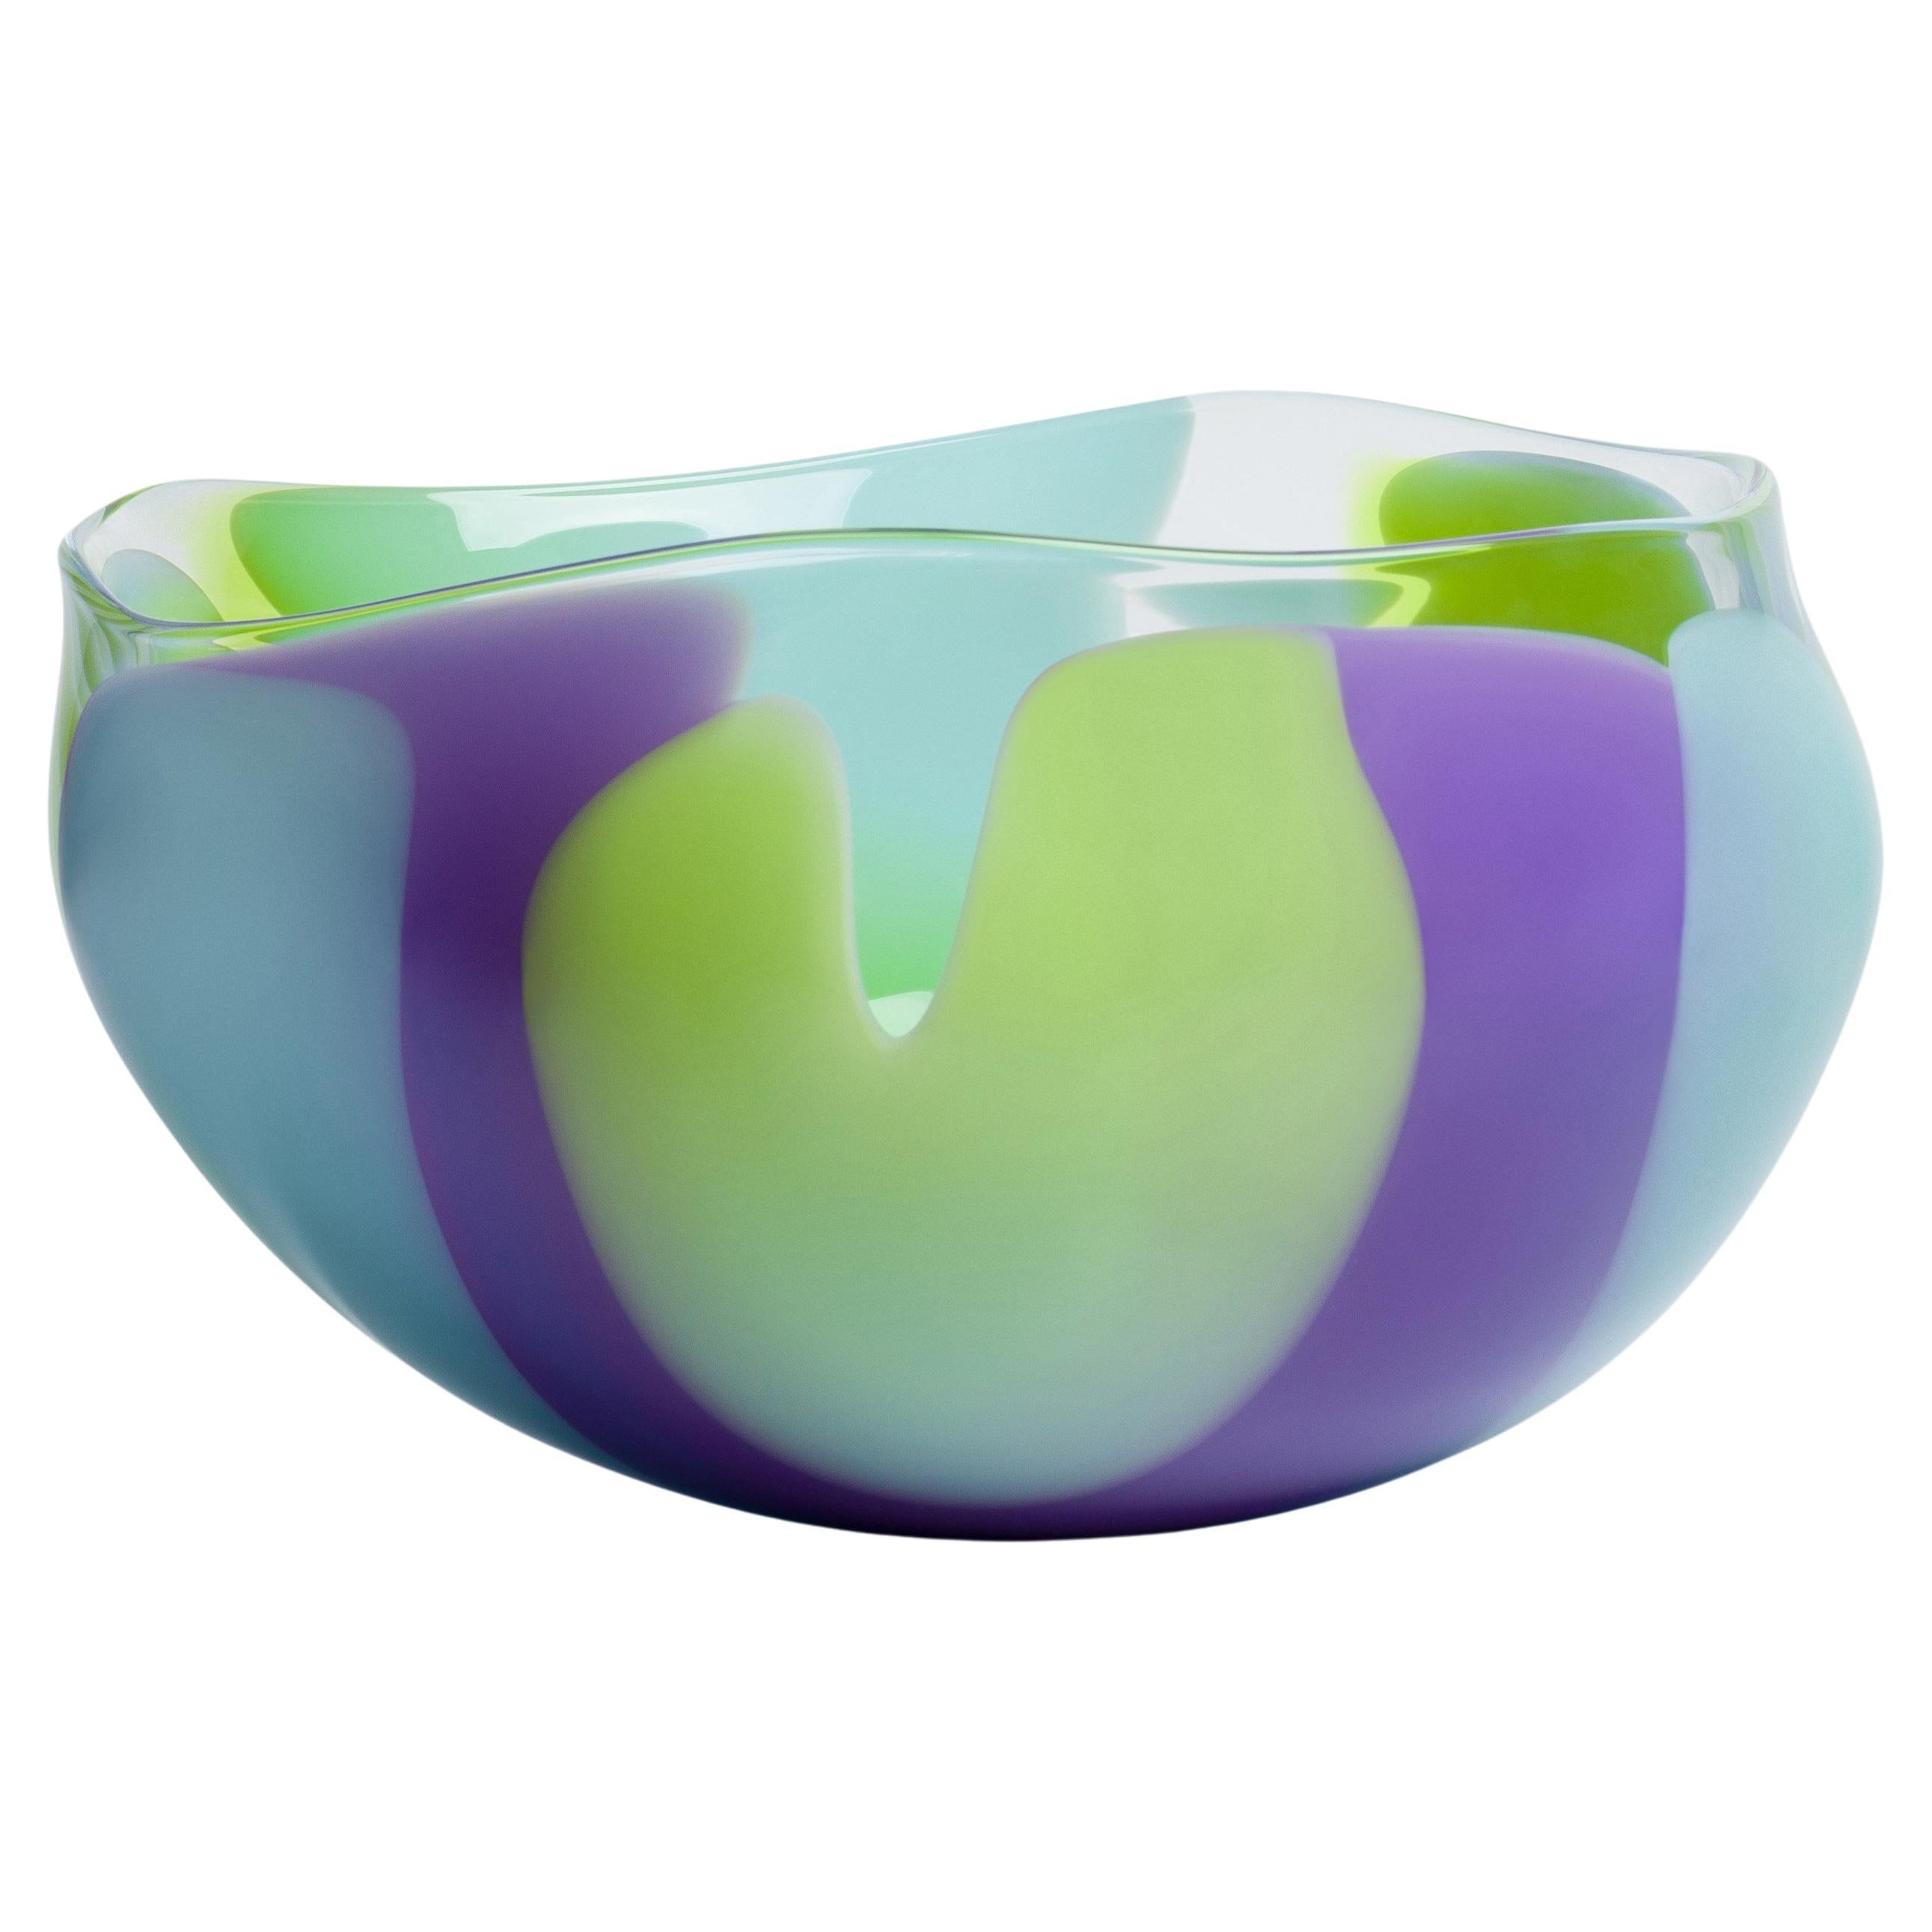 Waves No 652, lime, aqua & purple abstract fluid glass bowl by Neil Wilkin